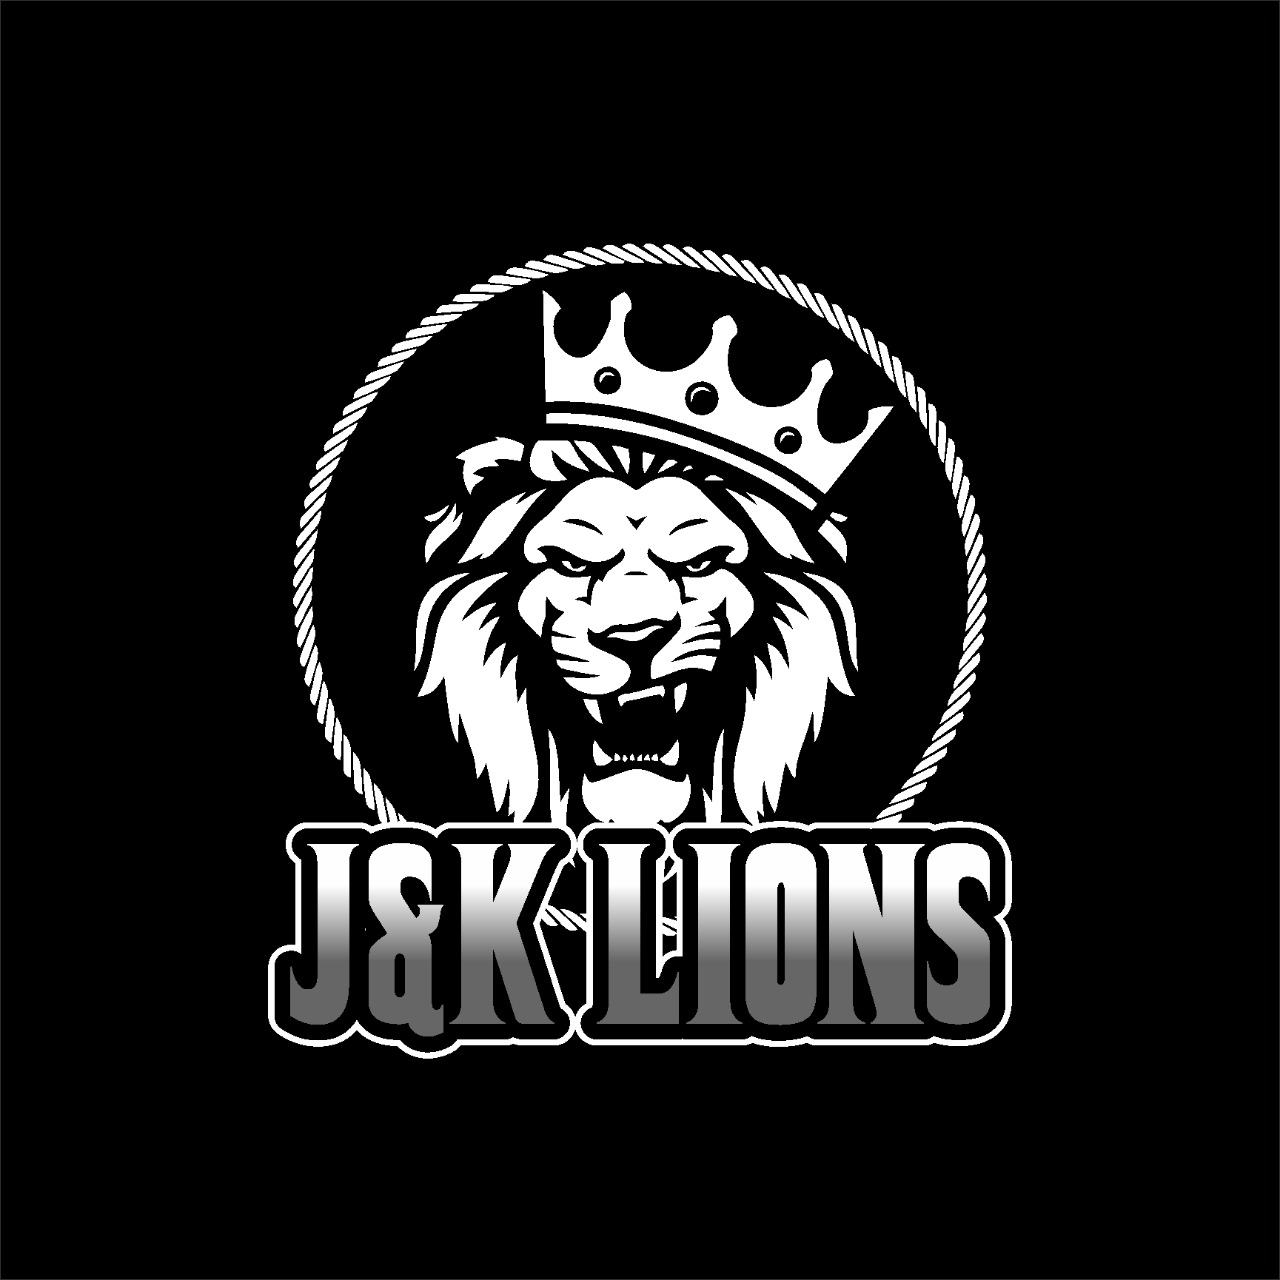 J&K LIONS